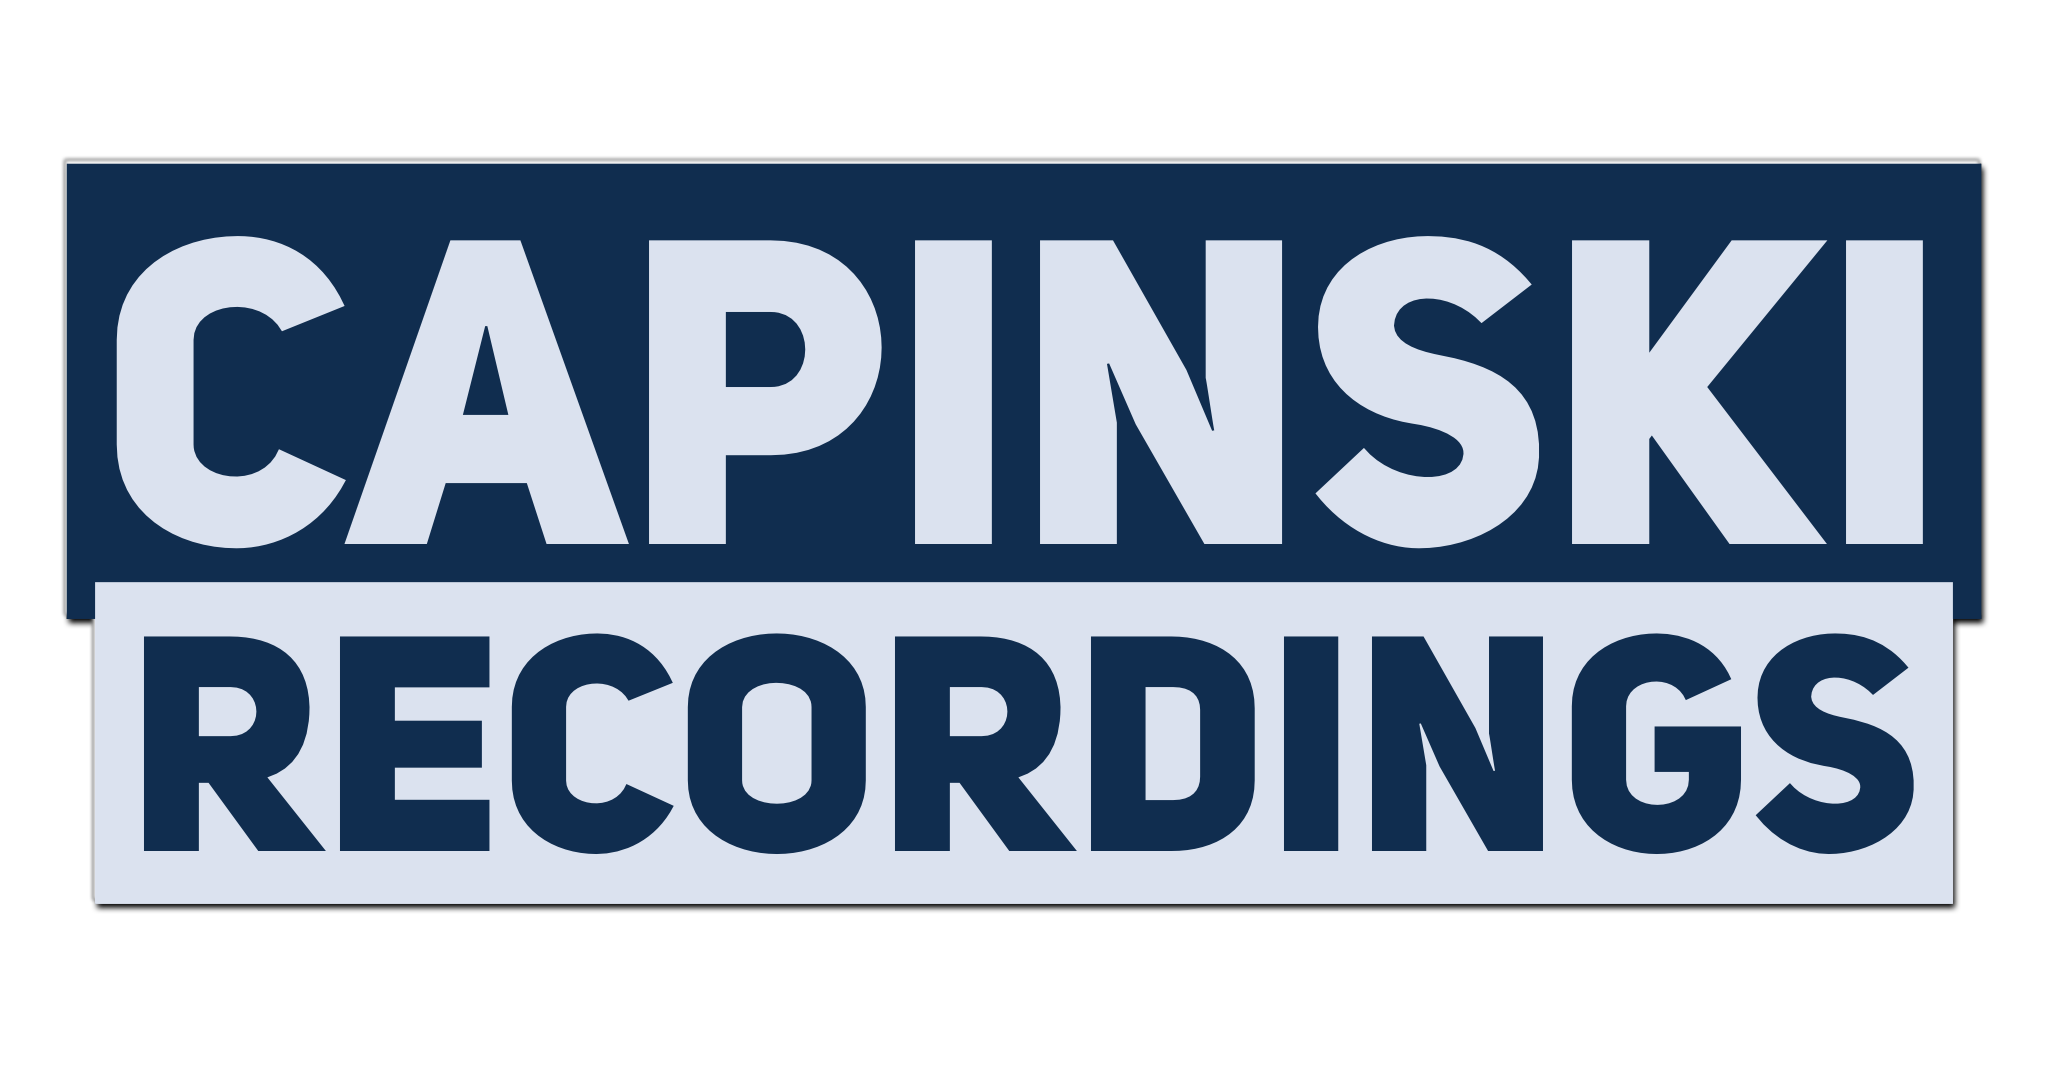 CAPINSKI RECORDINGS